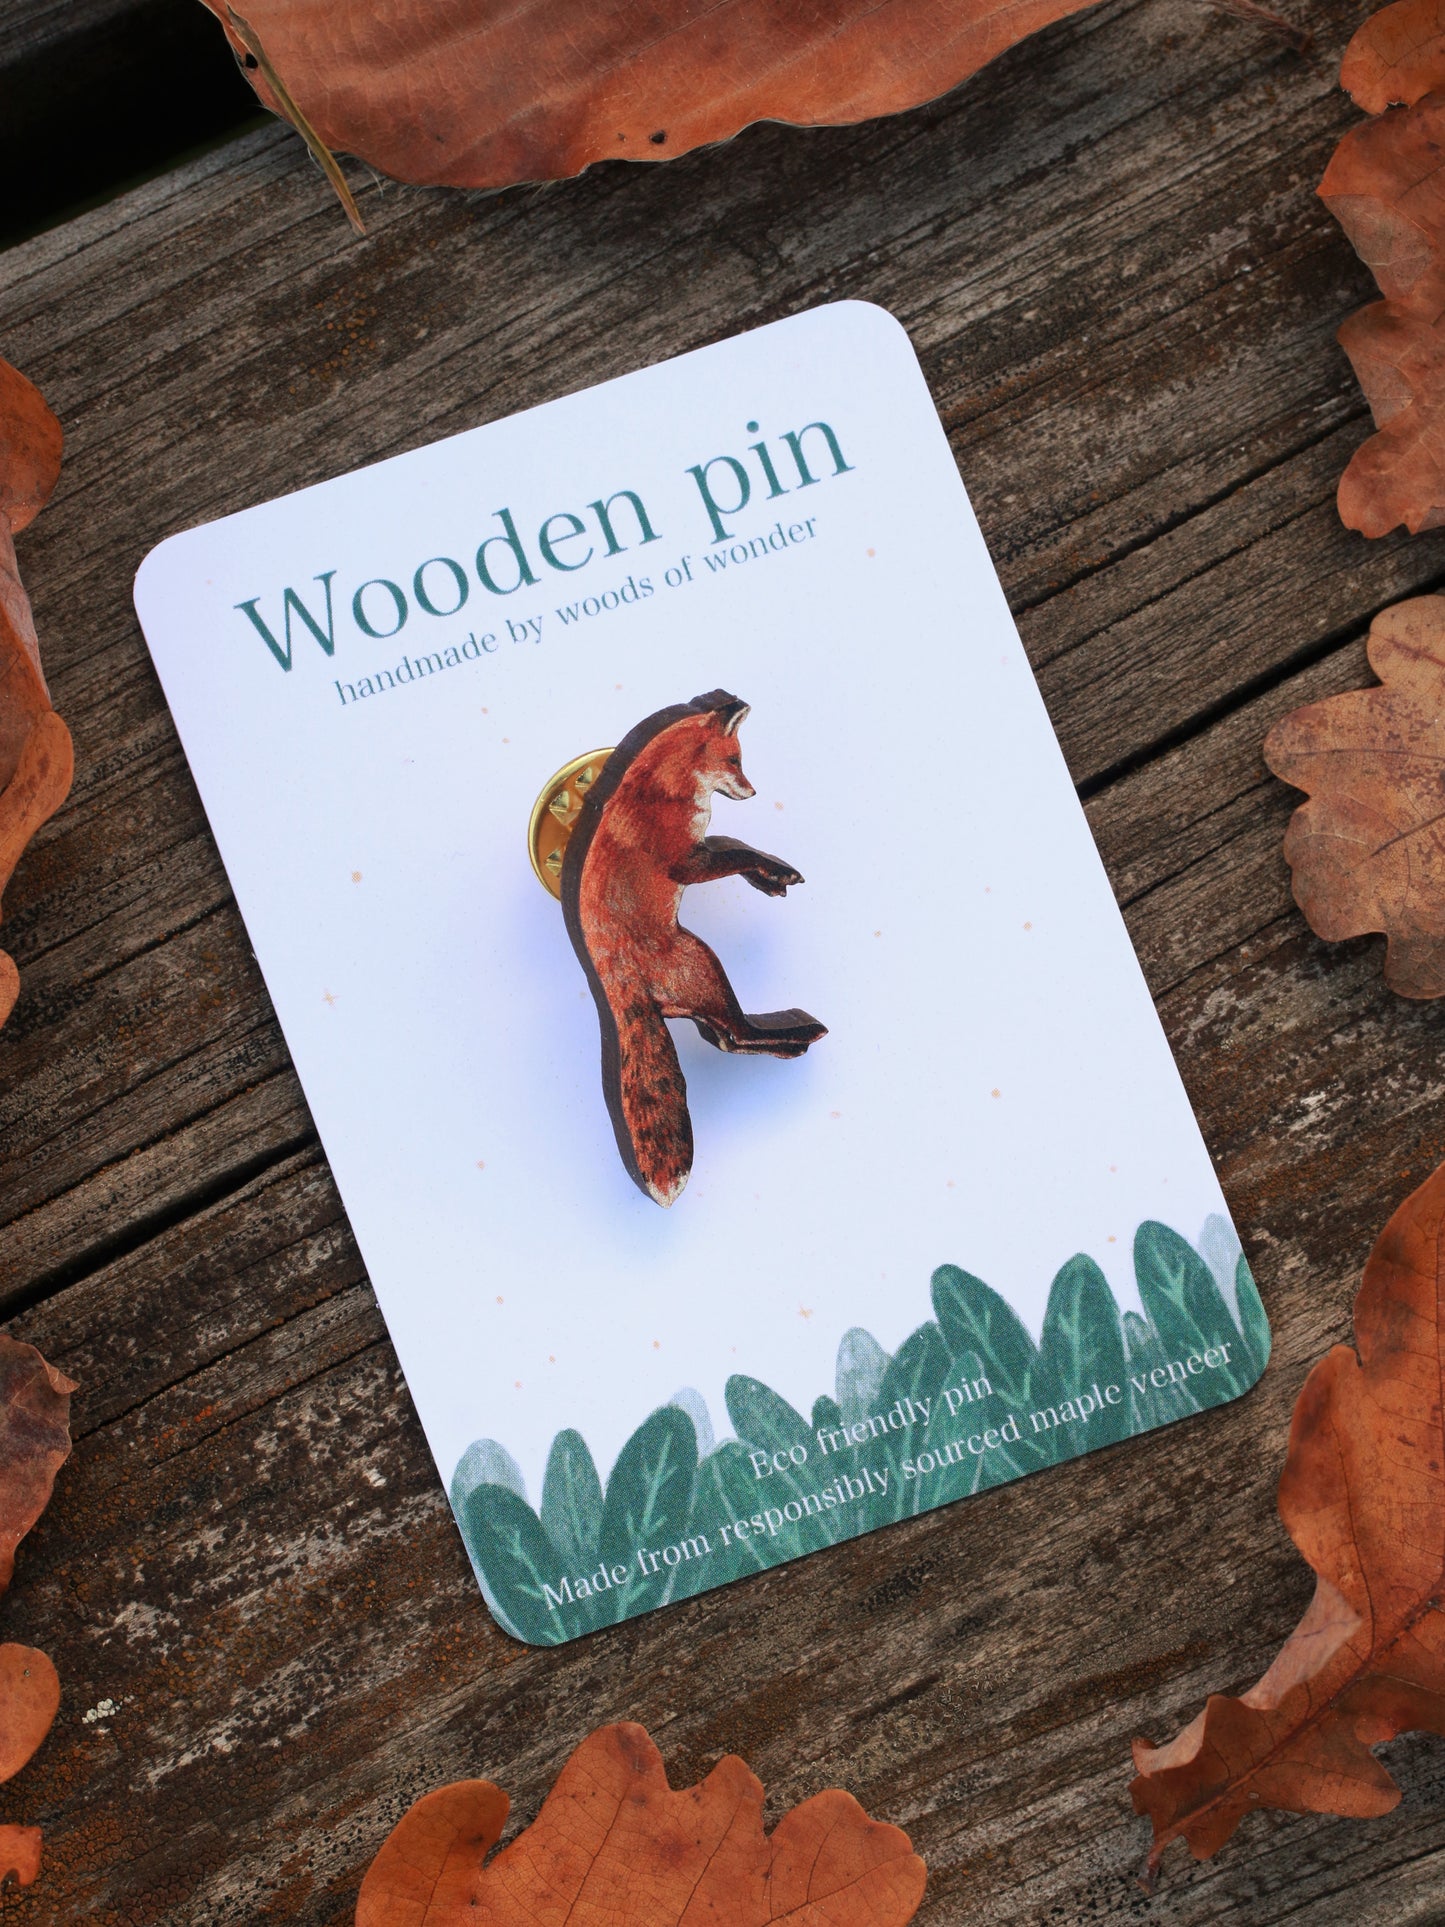 Jumping fox wooden pin